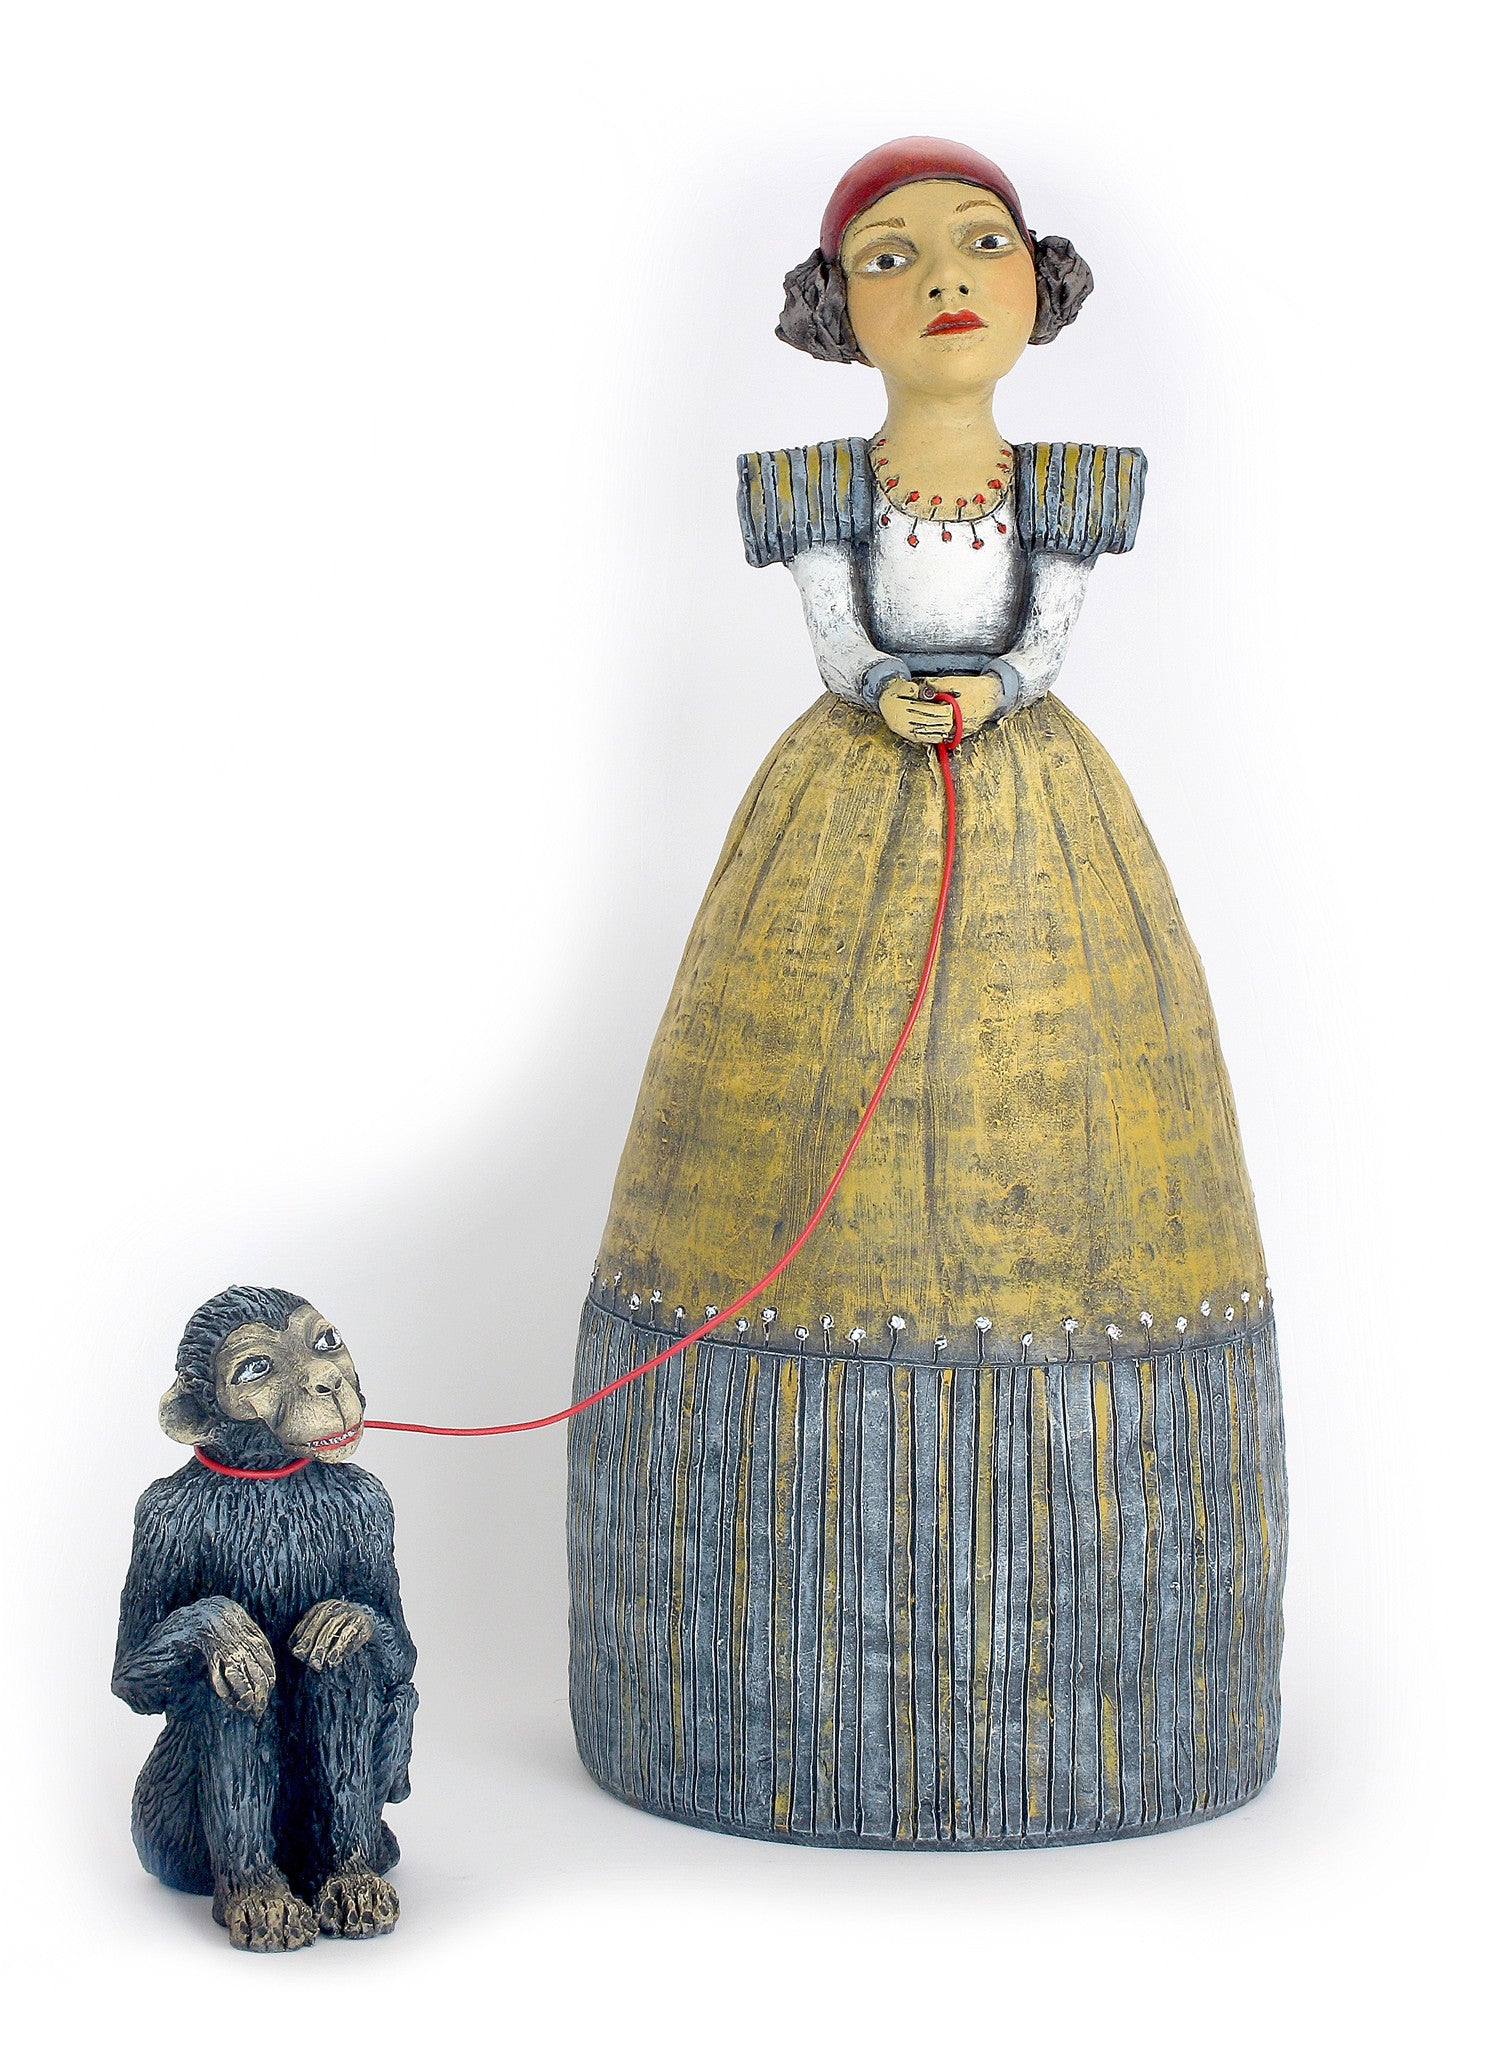 SOLD  "Keeping Her Mischief Politely in Check" original ceramic sculpture by Jacquline Hurlbert